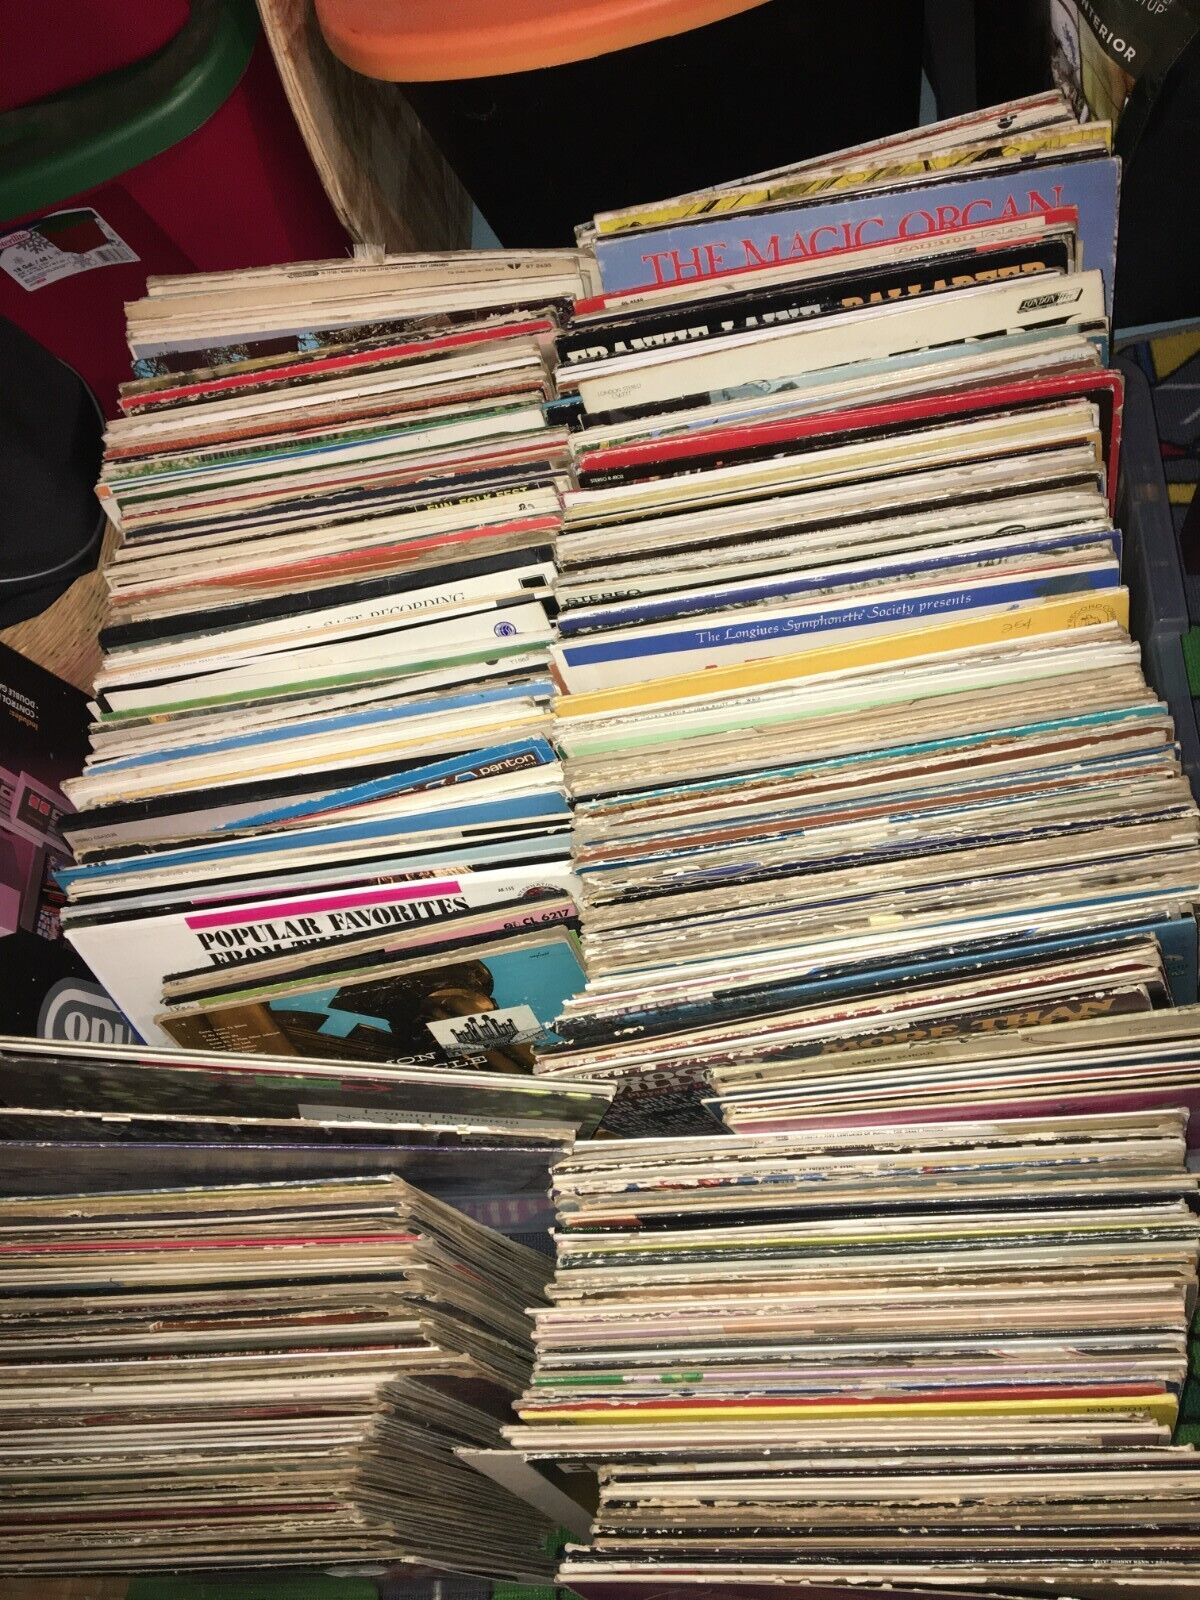 Lot of 20 Random Vinyl Records (12 inch)  - Old Real Vintage (1950-1990s)